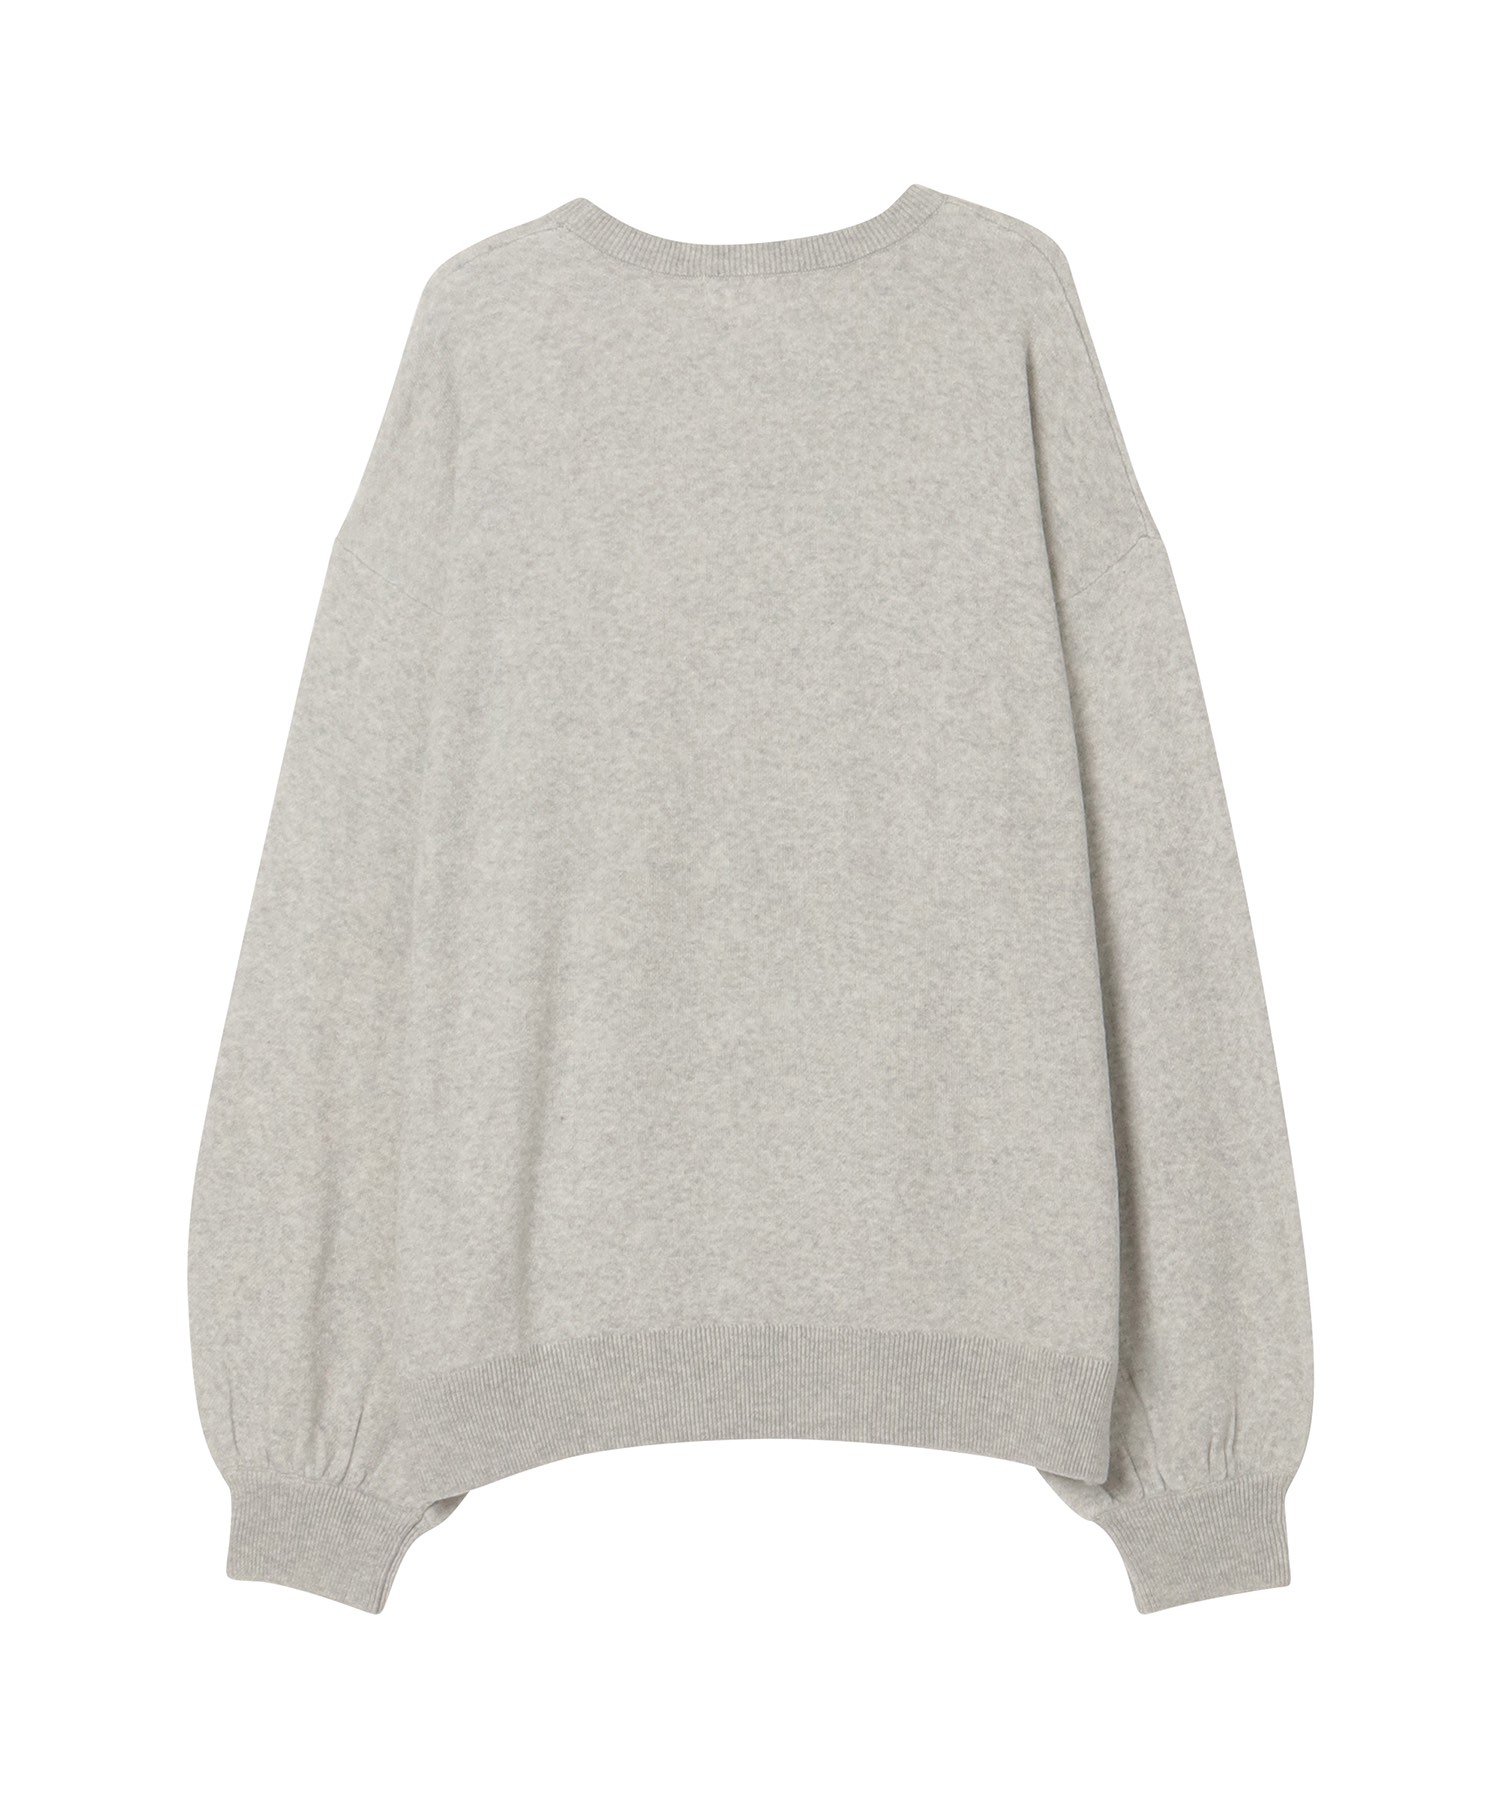 RM logo knit_L size【gray】 – BUNNY APARTMENT